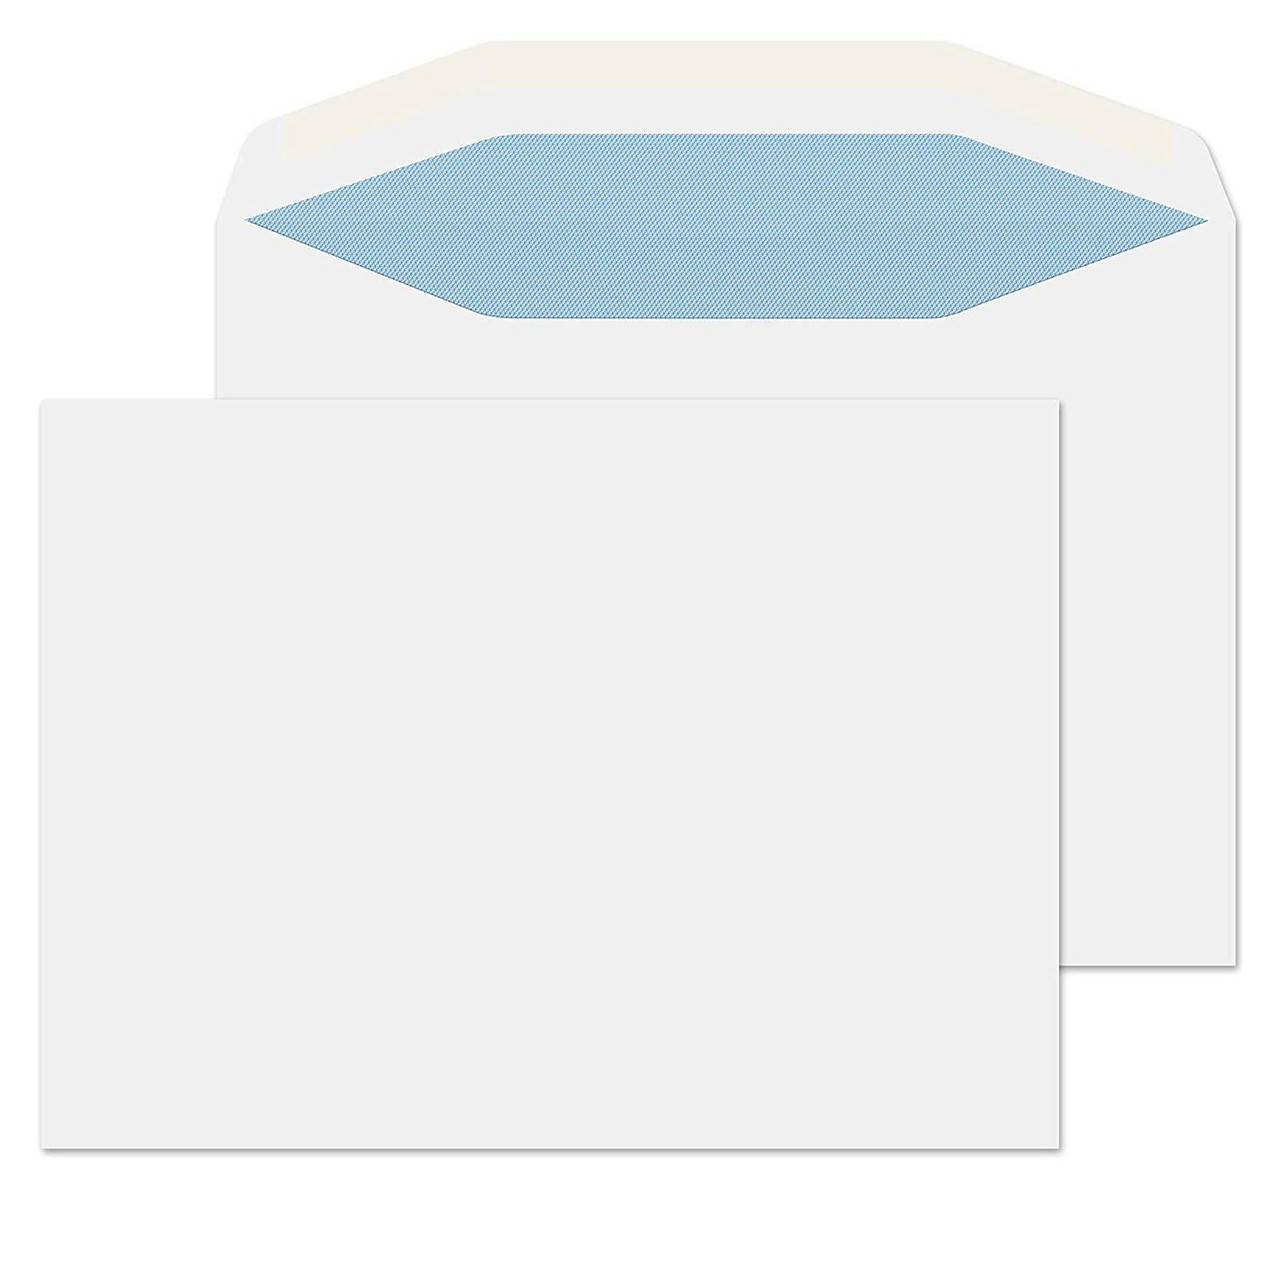 Folder Inserter Envelopes - 1000pcs - EXTRA WIDE 238mm C5 Non-Window